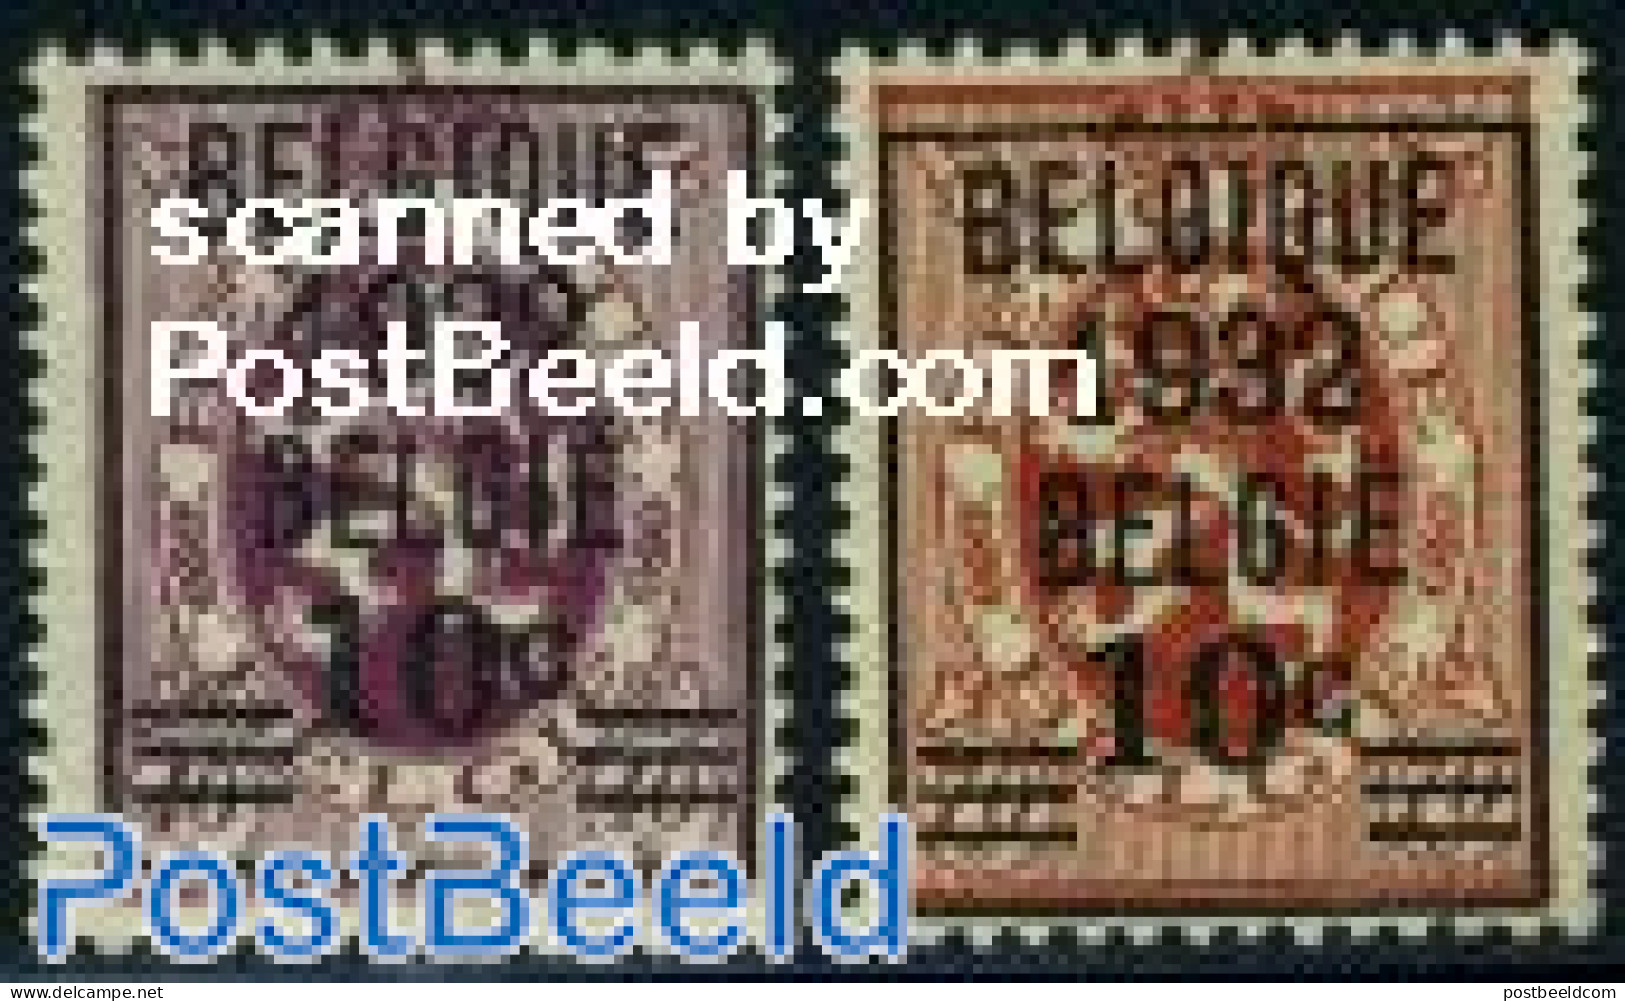 Belgium 1932 Overprints 2v, Mint NH - Ungebraucht